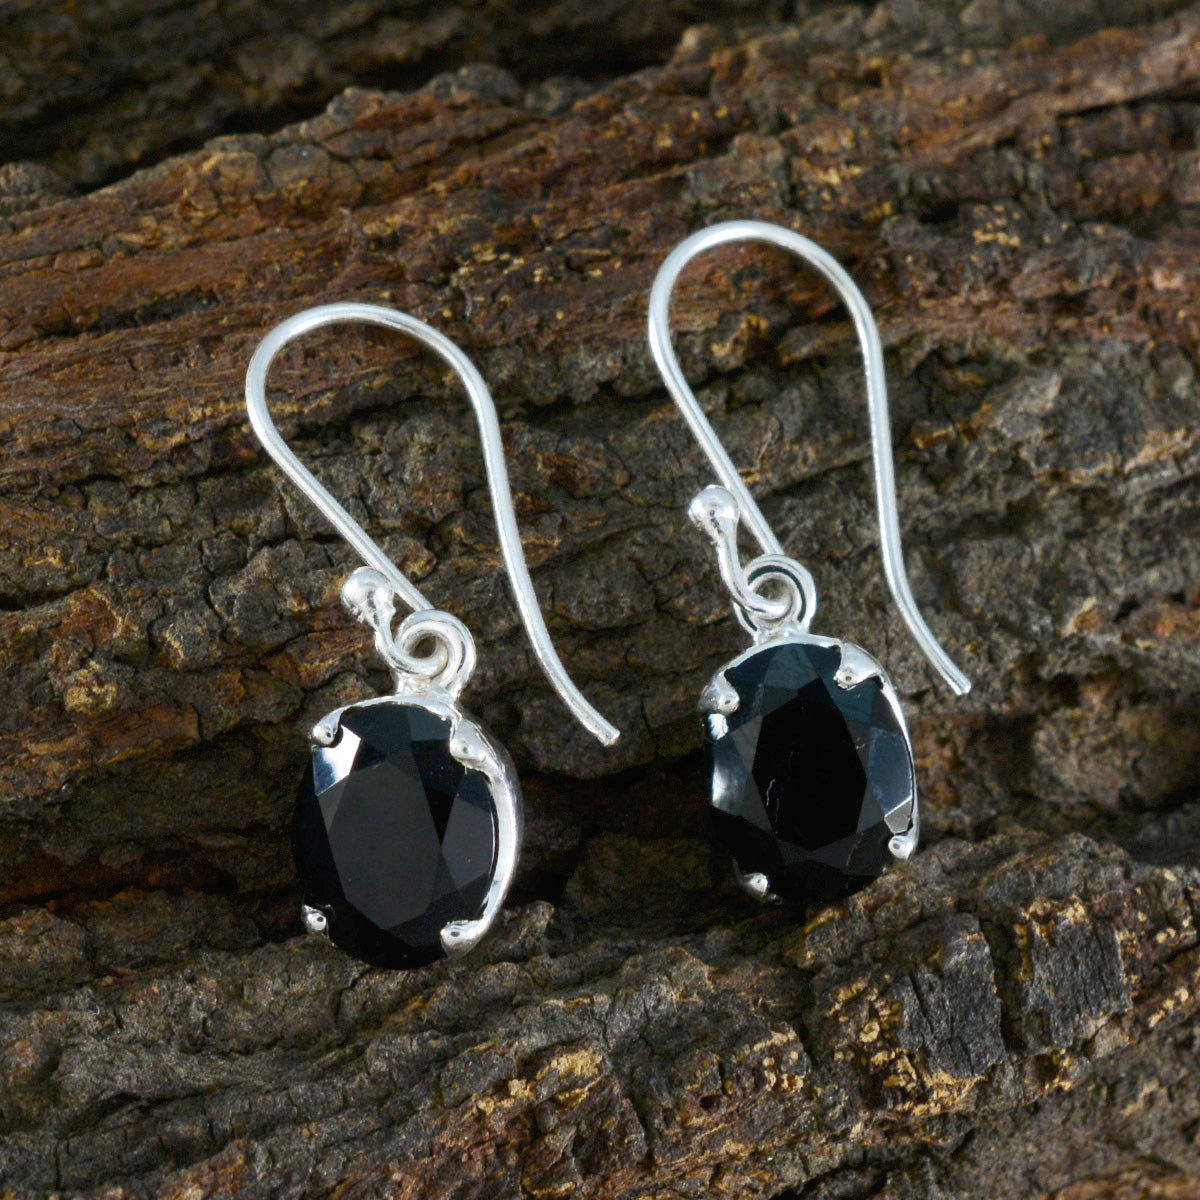 Riyo Exquisite Sterling Silver Earring For Lady Black Onyx Earring Bezel Setting Black Earring Dangle Earring